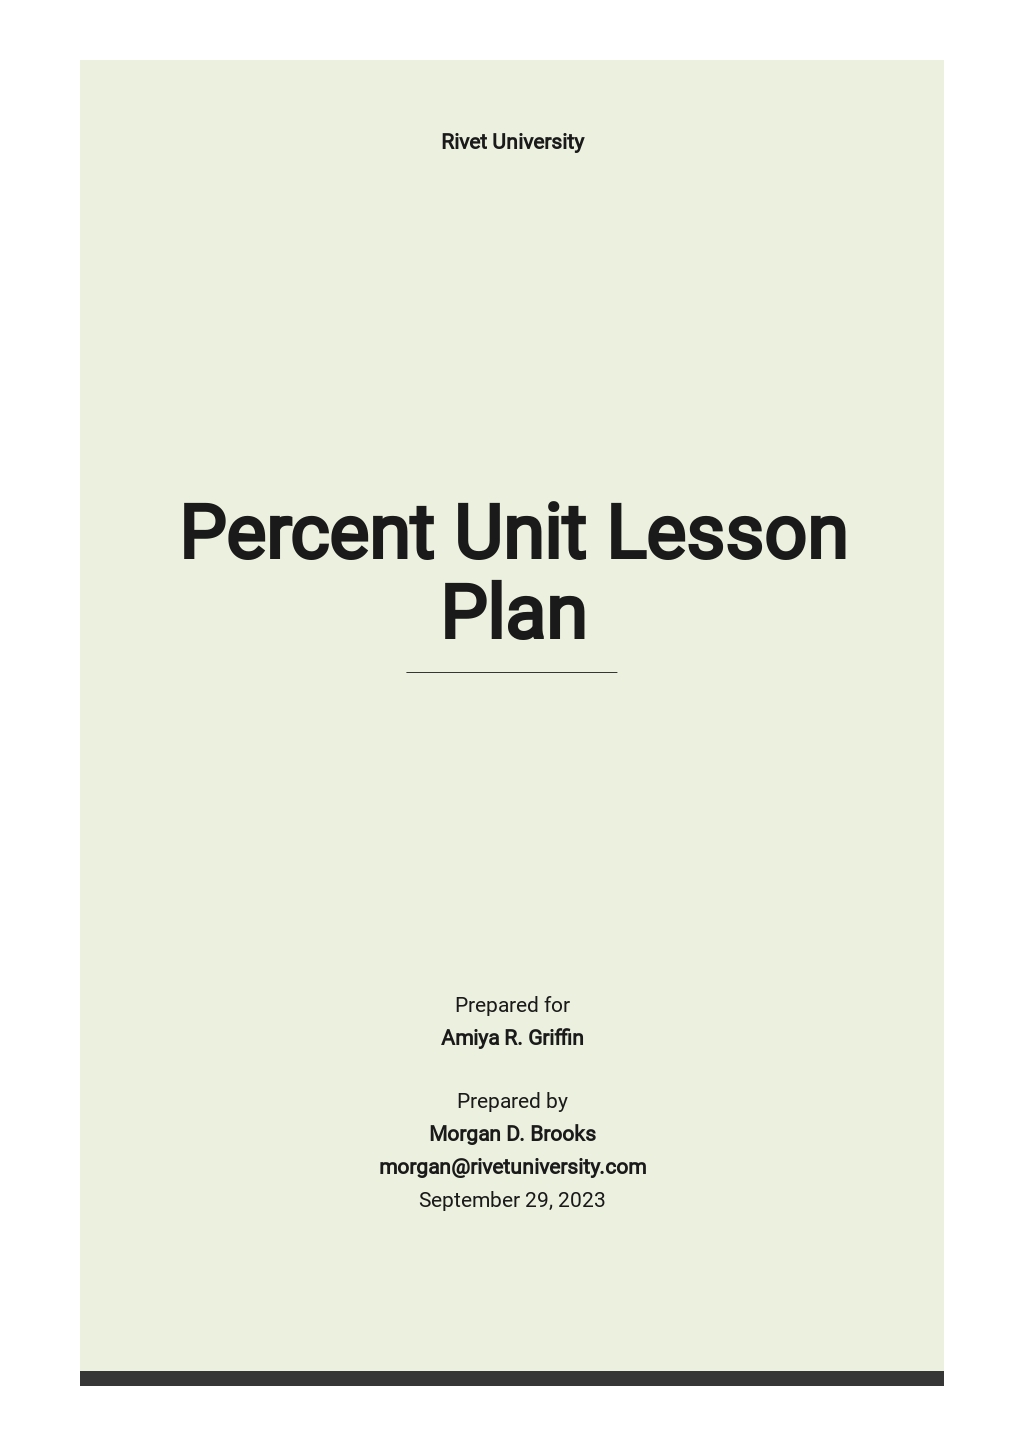 Percent Unit Plan Template.jpe